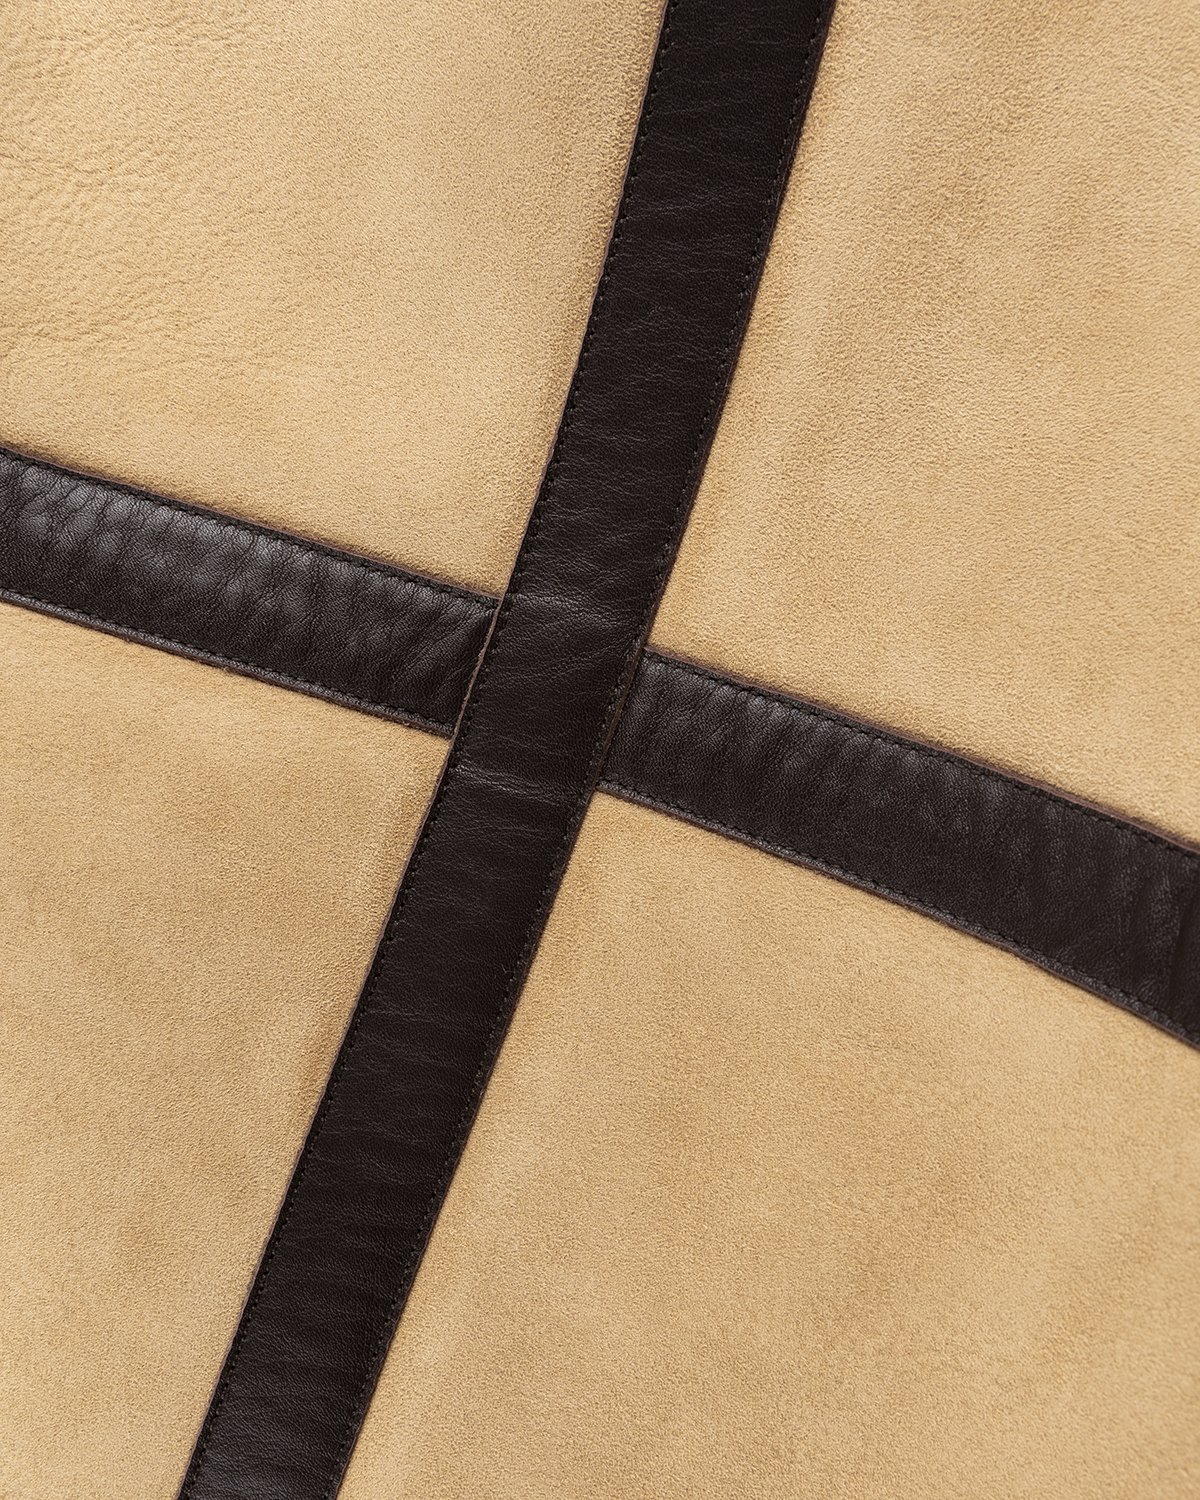 Acne Studios - Shearling Leather Jacket Almond Beige - Clothing - Beige - Image 5